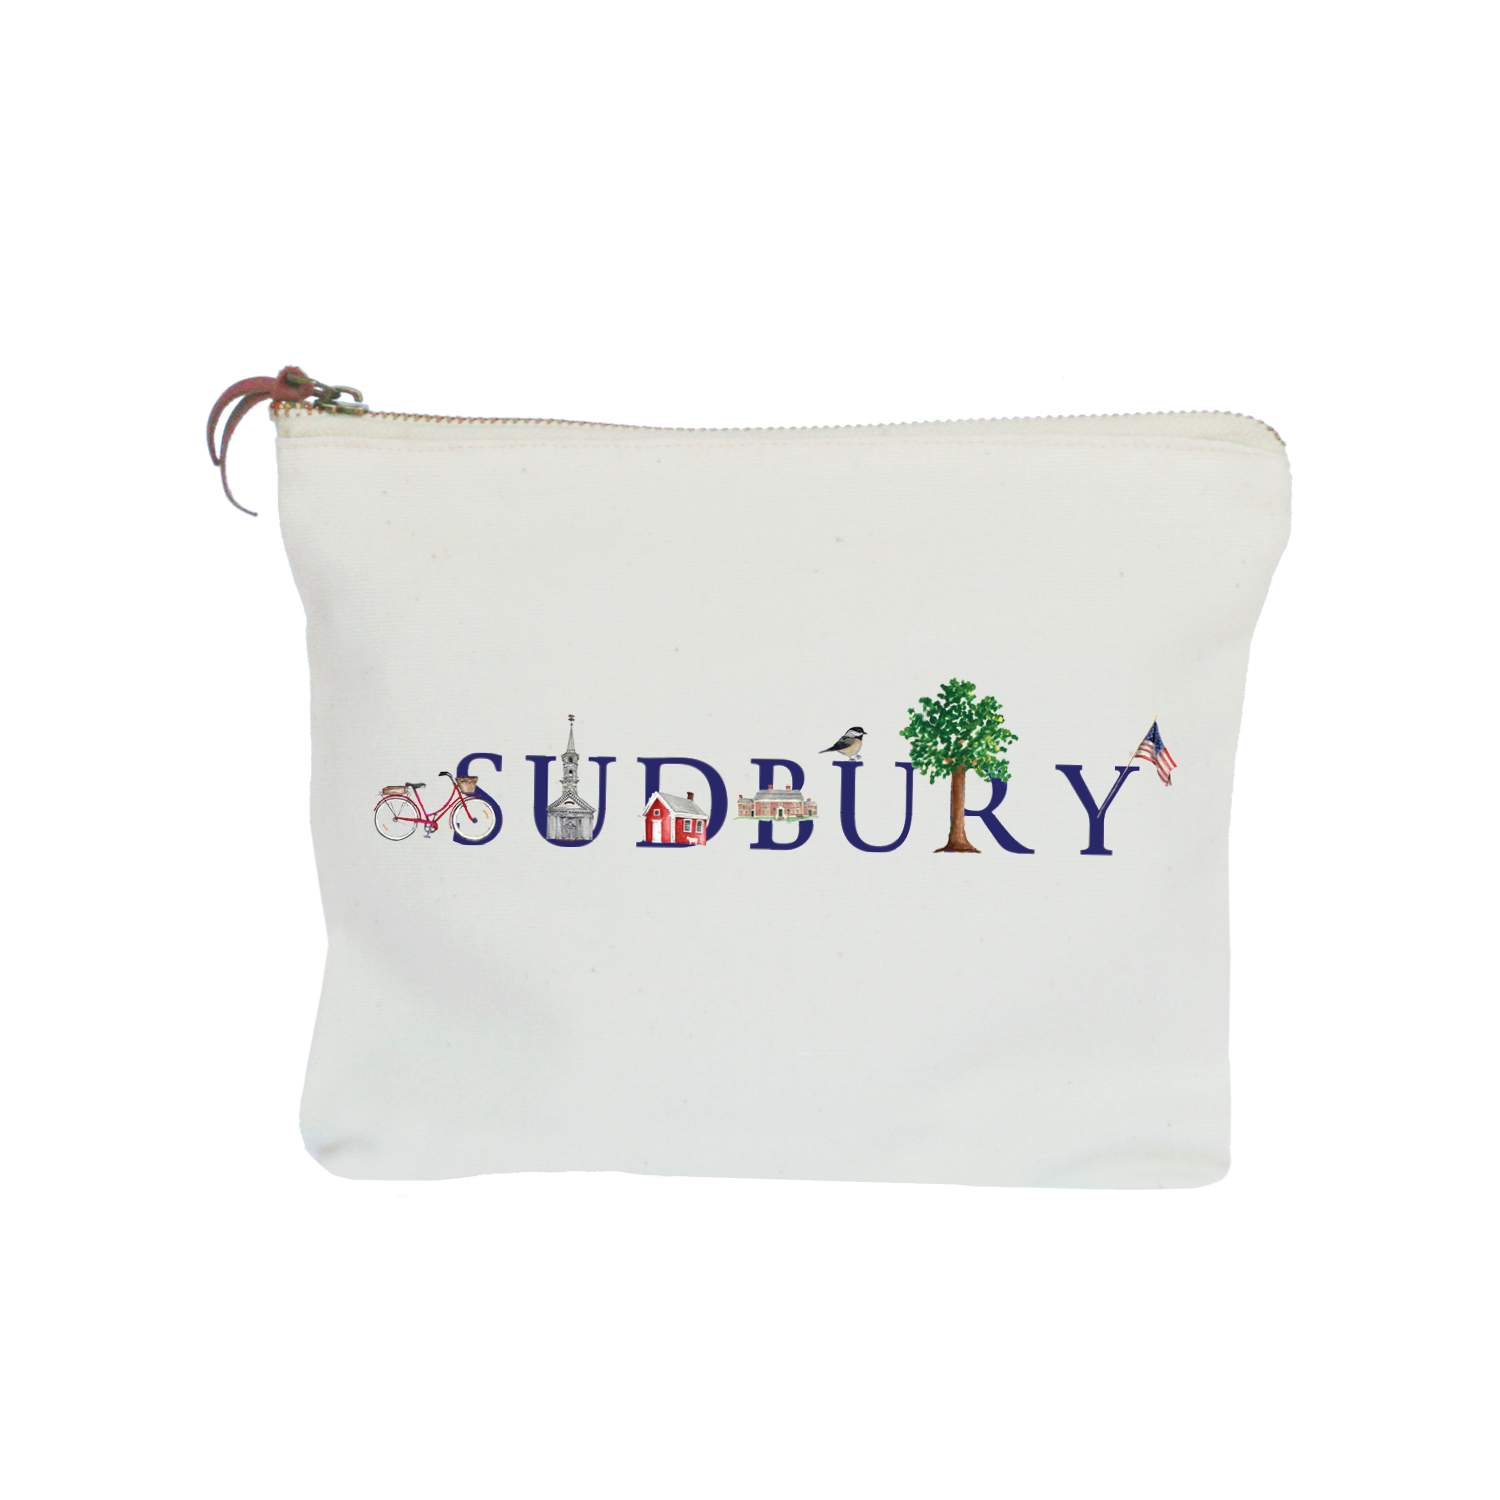 sudbury zipper pouch